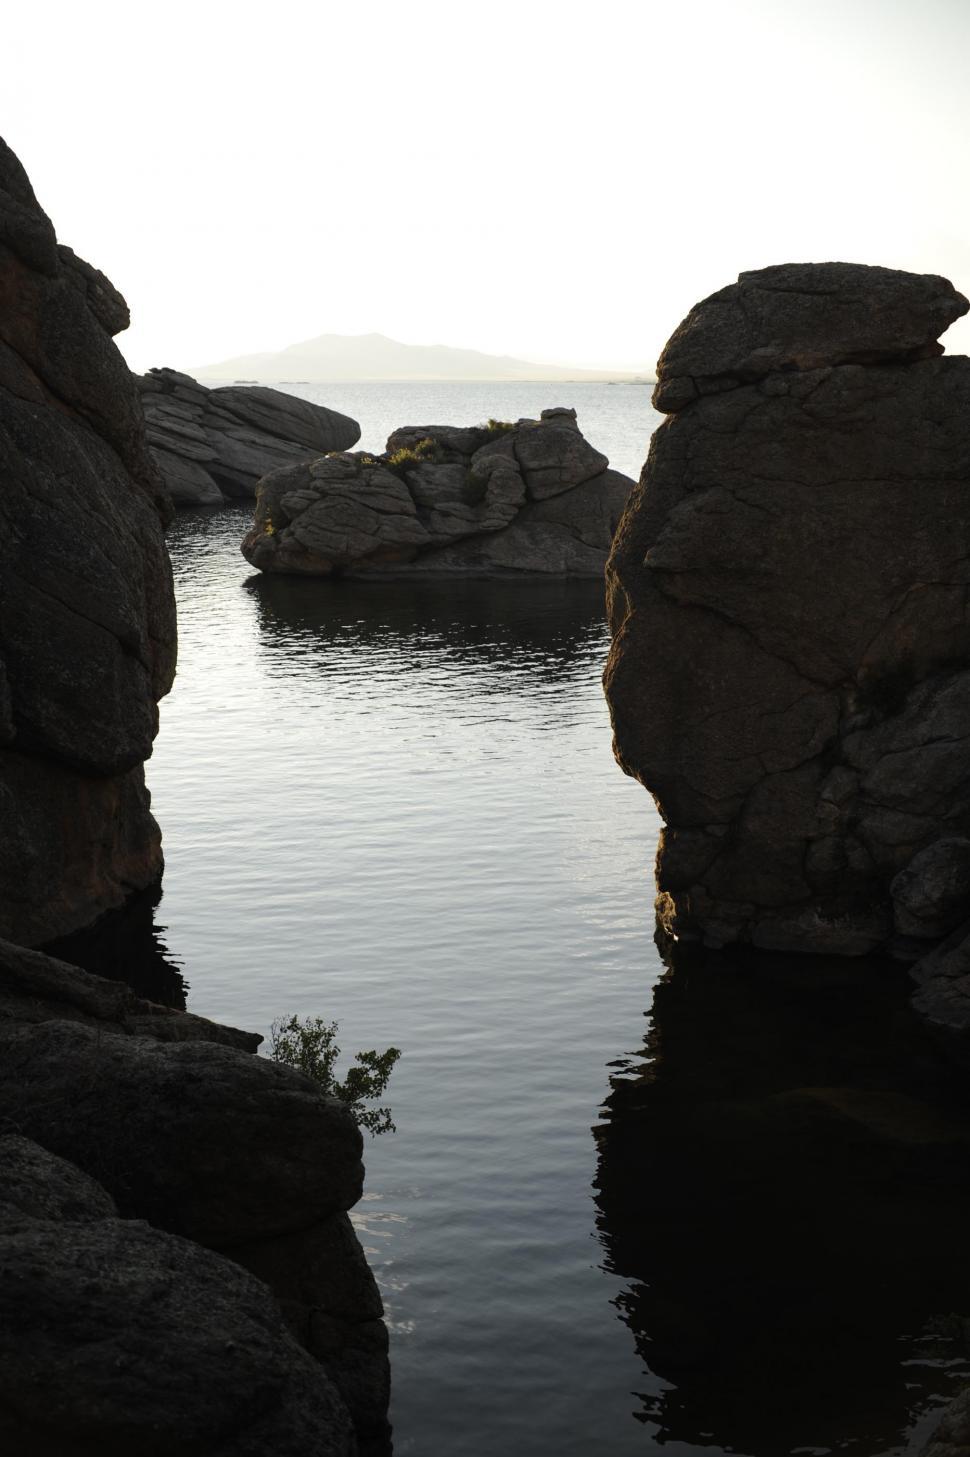 Free Image of Rocks in the Lake 